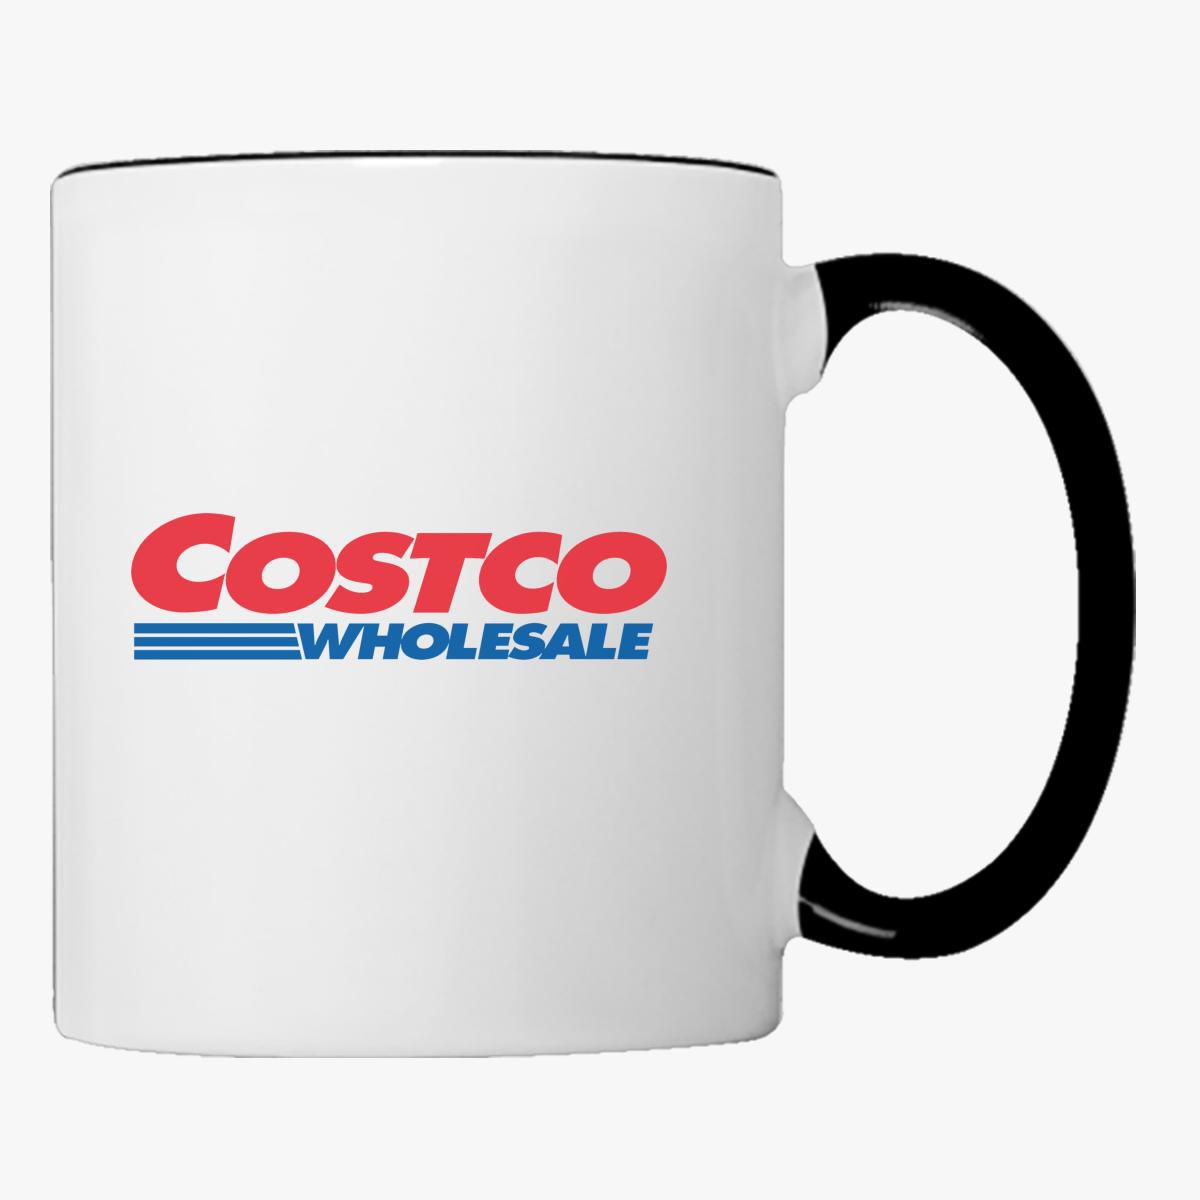 costco heated coffee mug